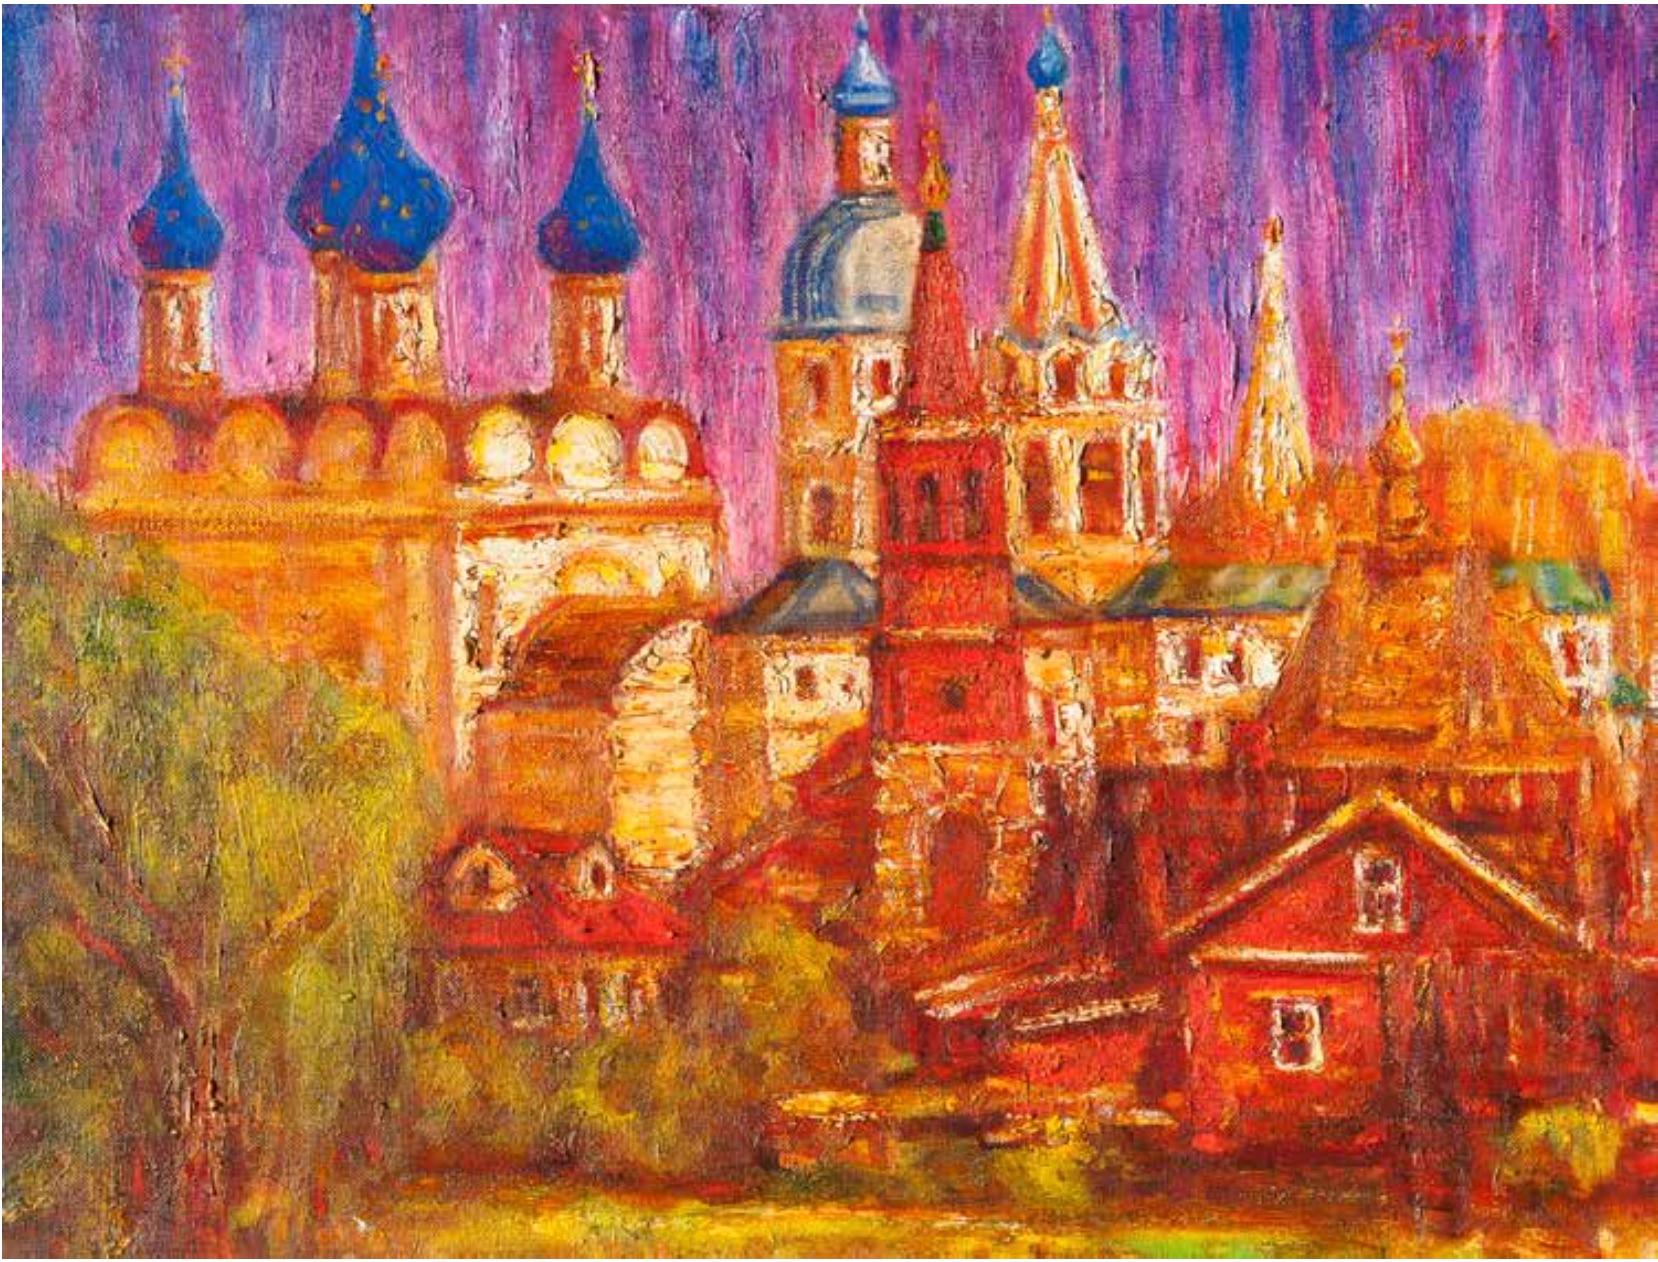 Suzdal Evening - Original Oil on burlap painting by Alexander Evgrafov